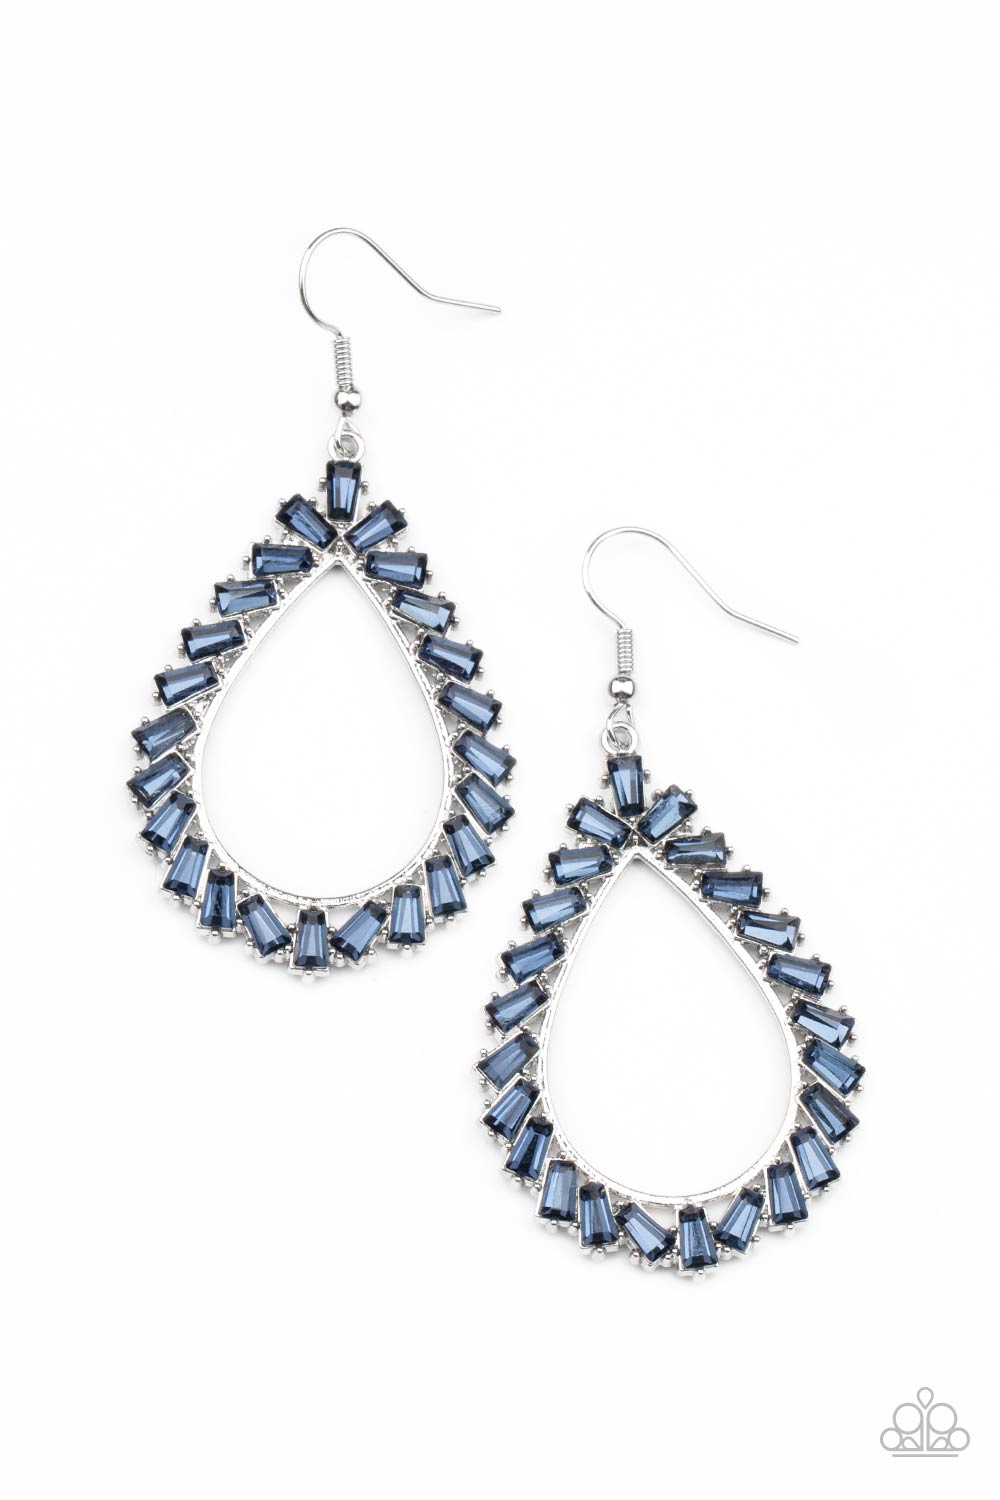 Stay Sharp - Blue Earrings - Princess Glam Shop